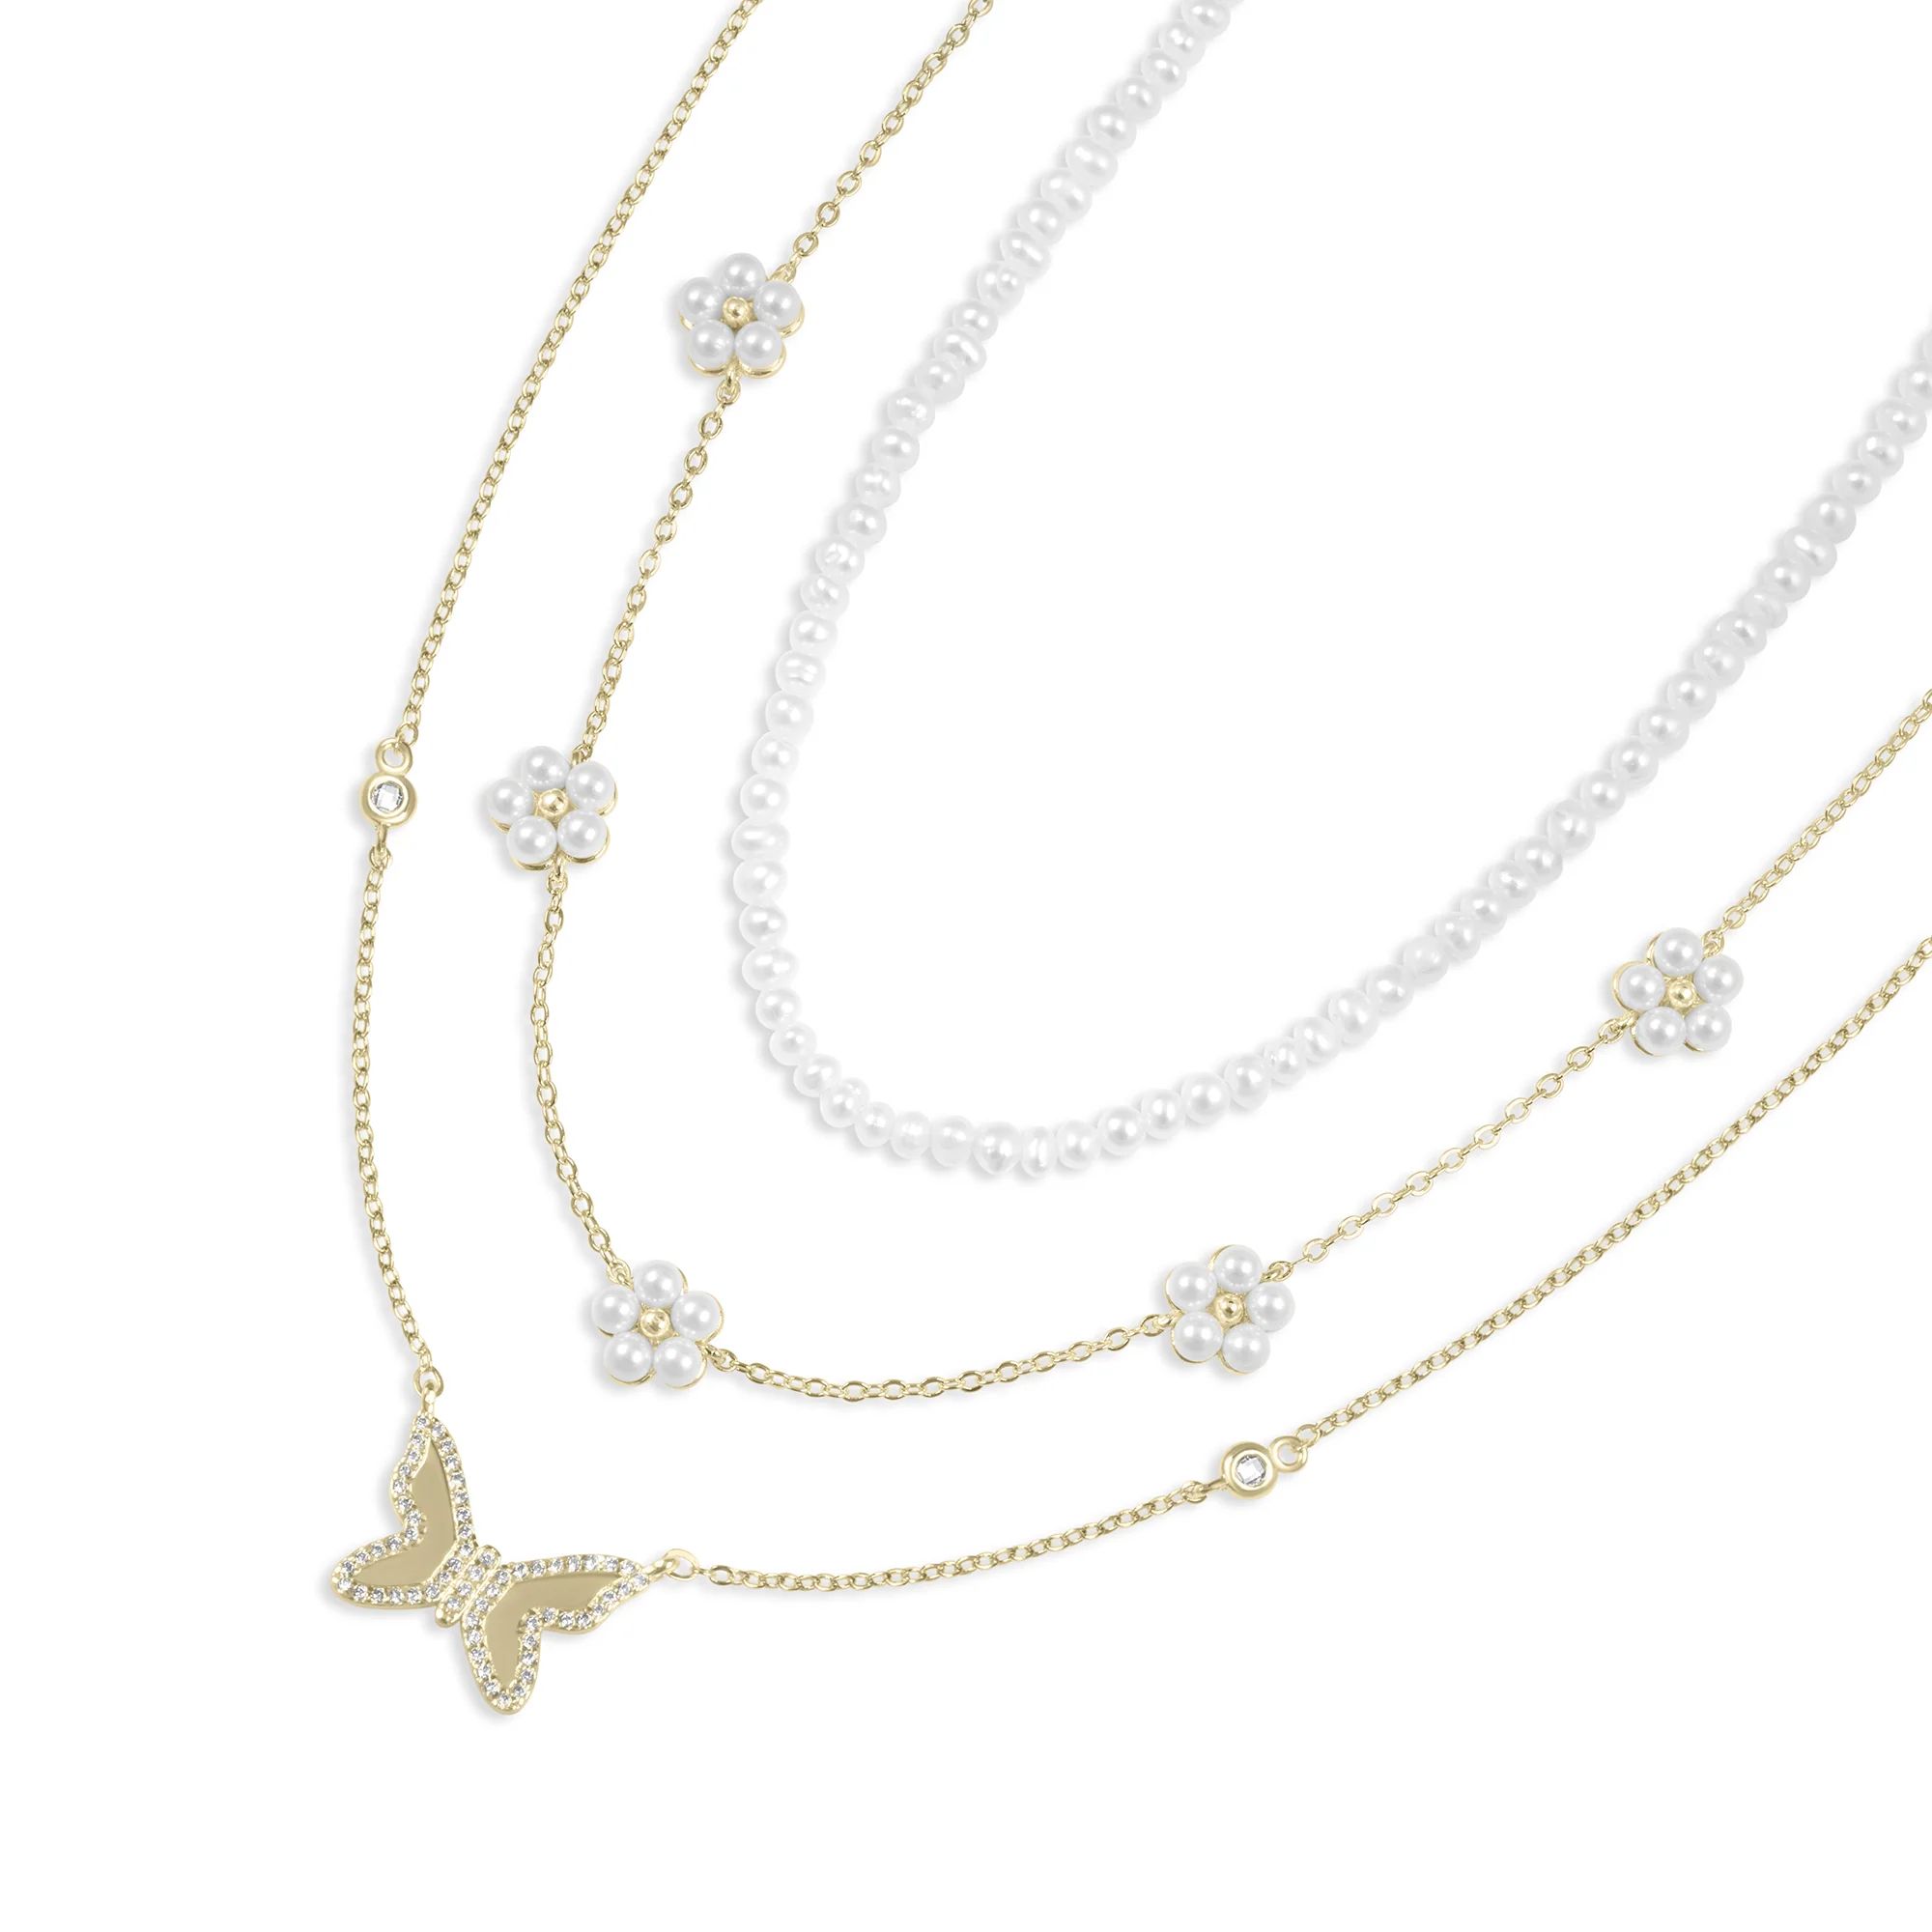 Daisy Duke Necklace Set of 3 | Electric Picks Jewelry